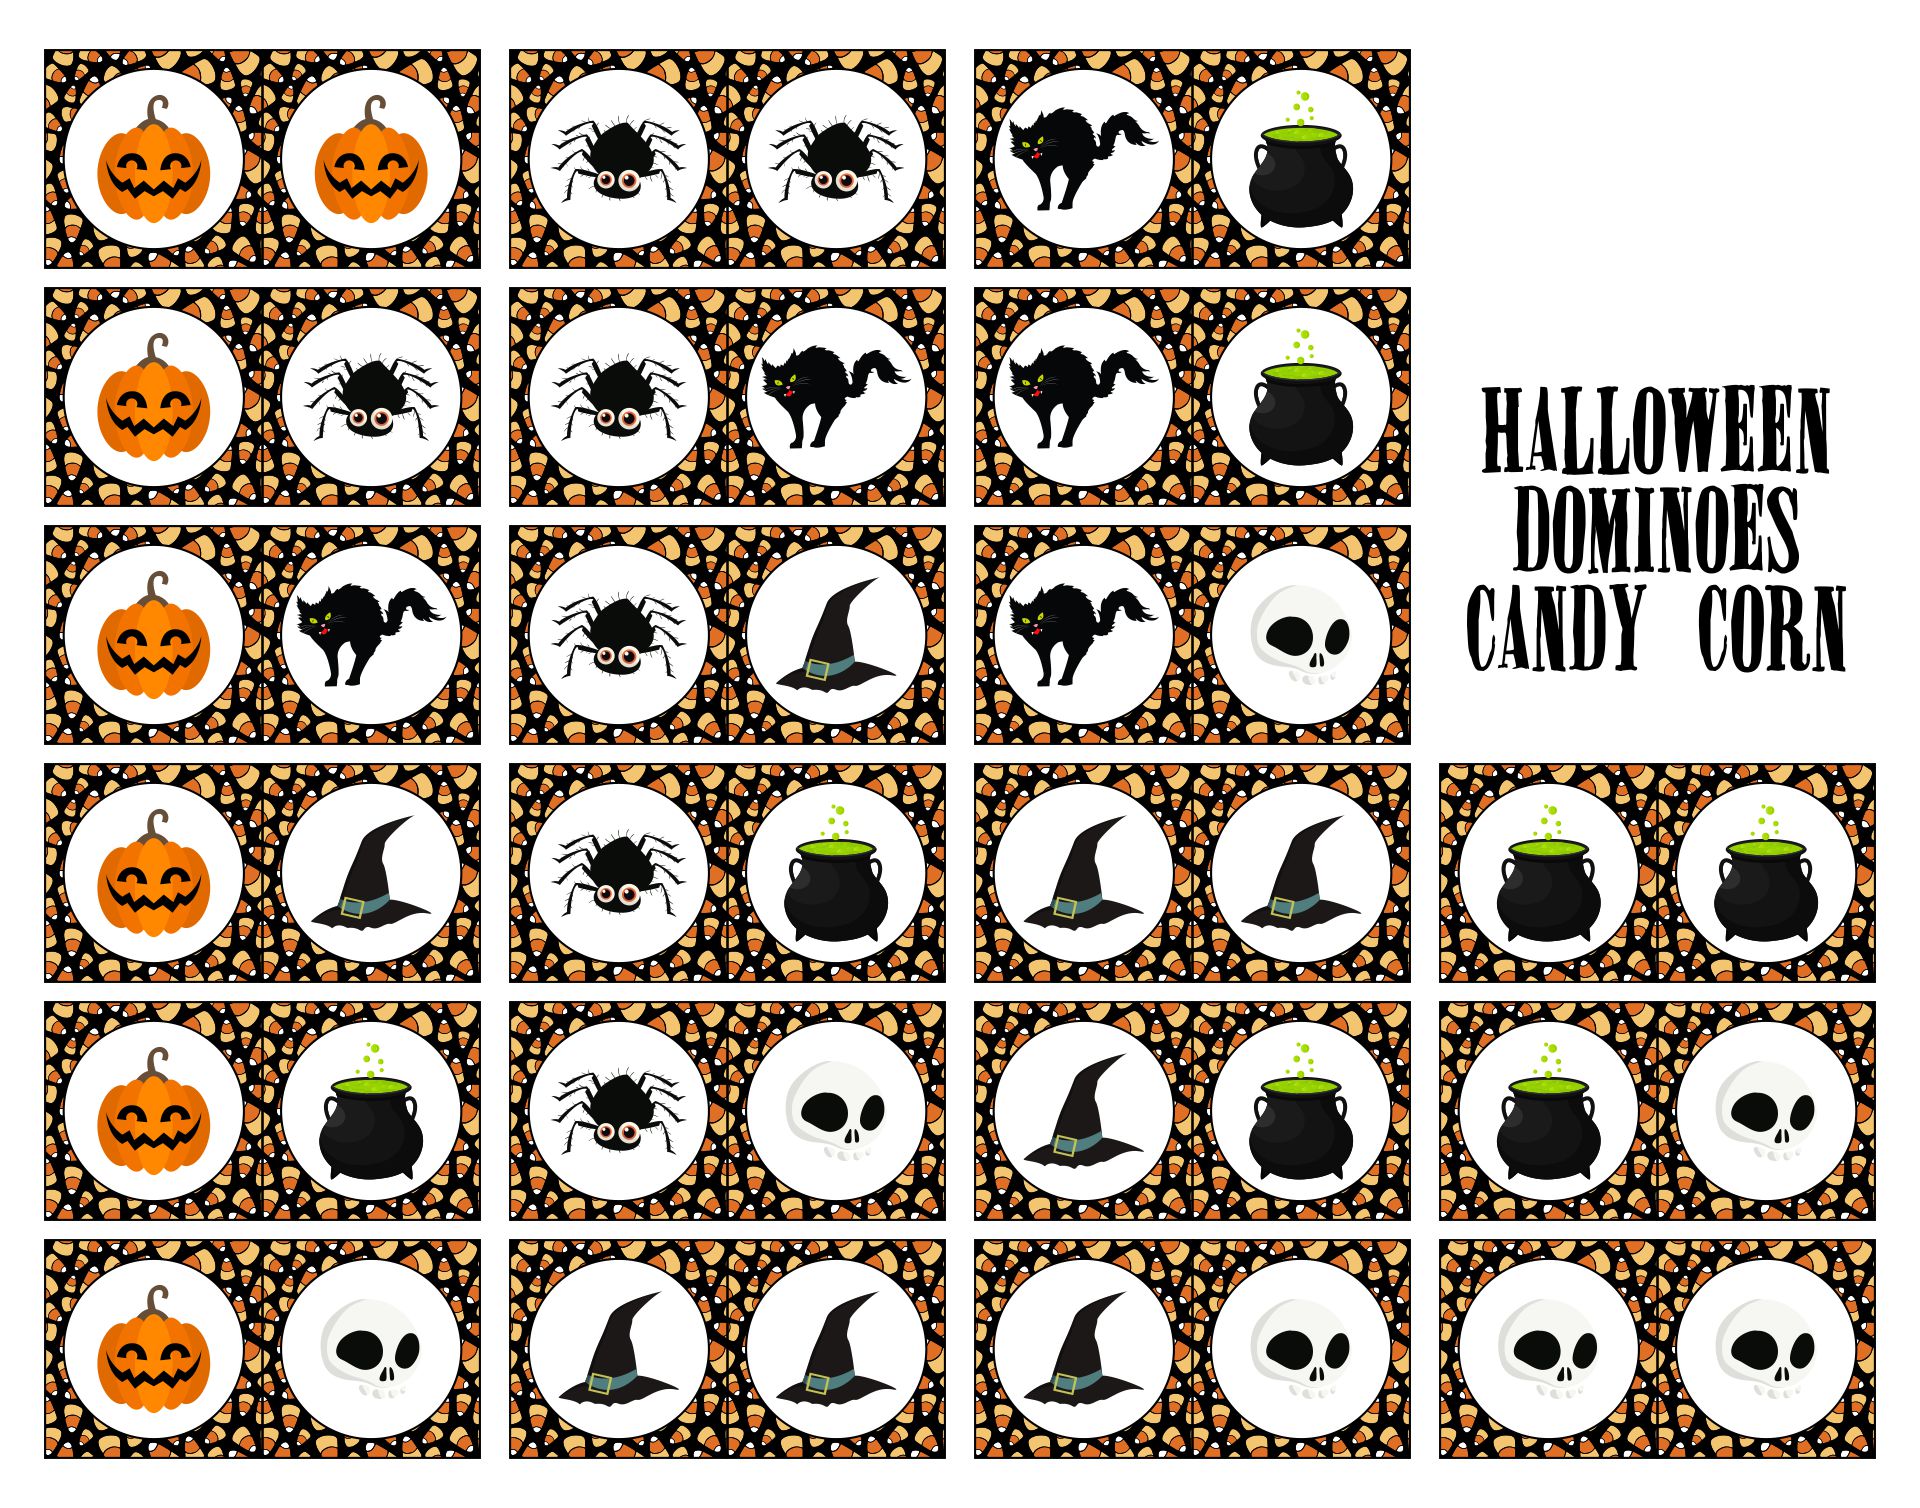 Candy Corn Dominoes Halloween Game Activity Printable